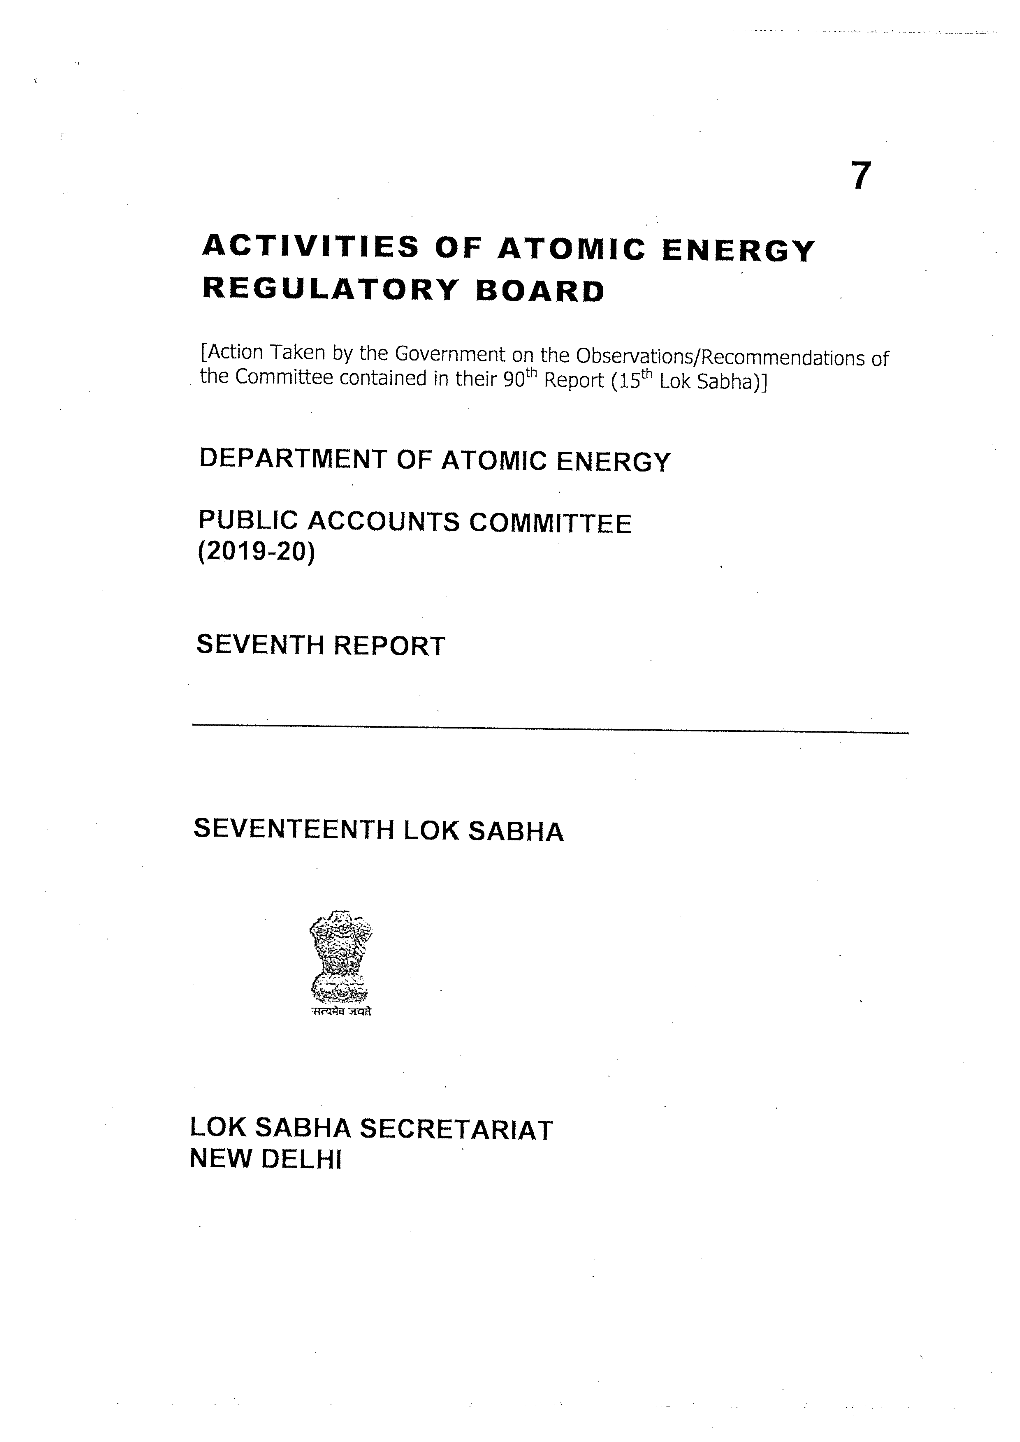 Activities of Atomic Energy Regulatory Board